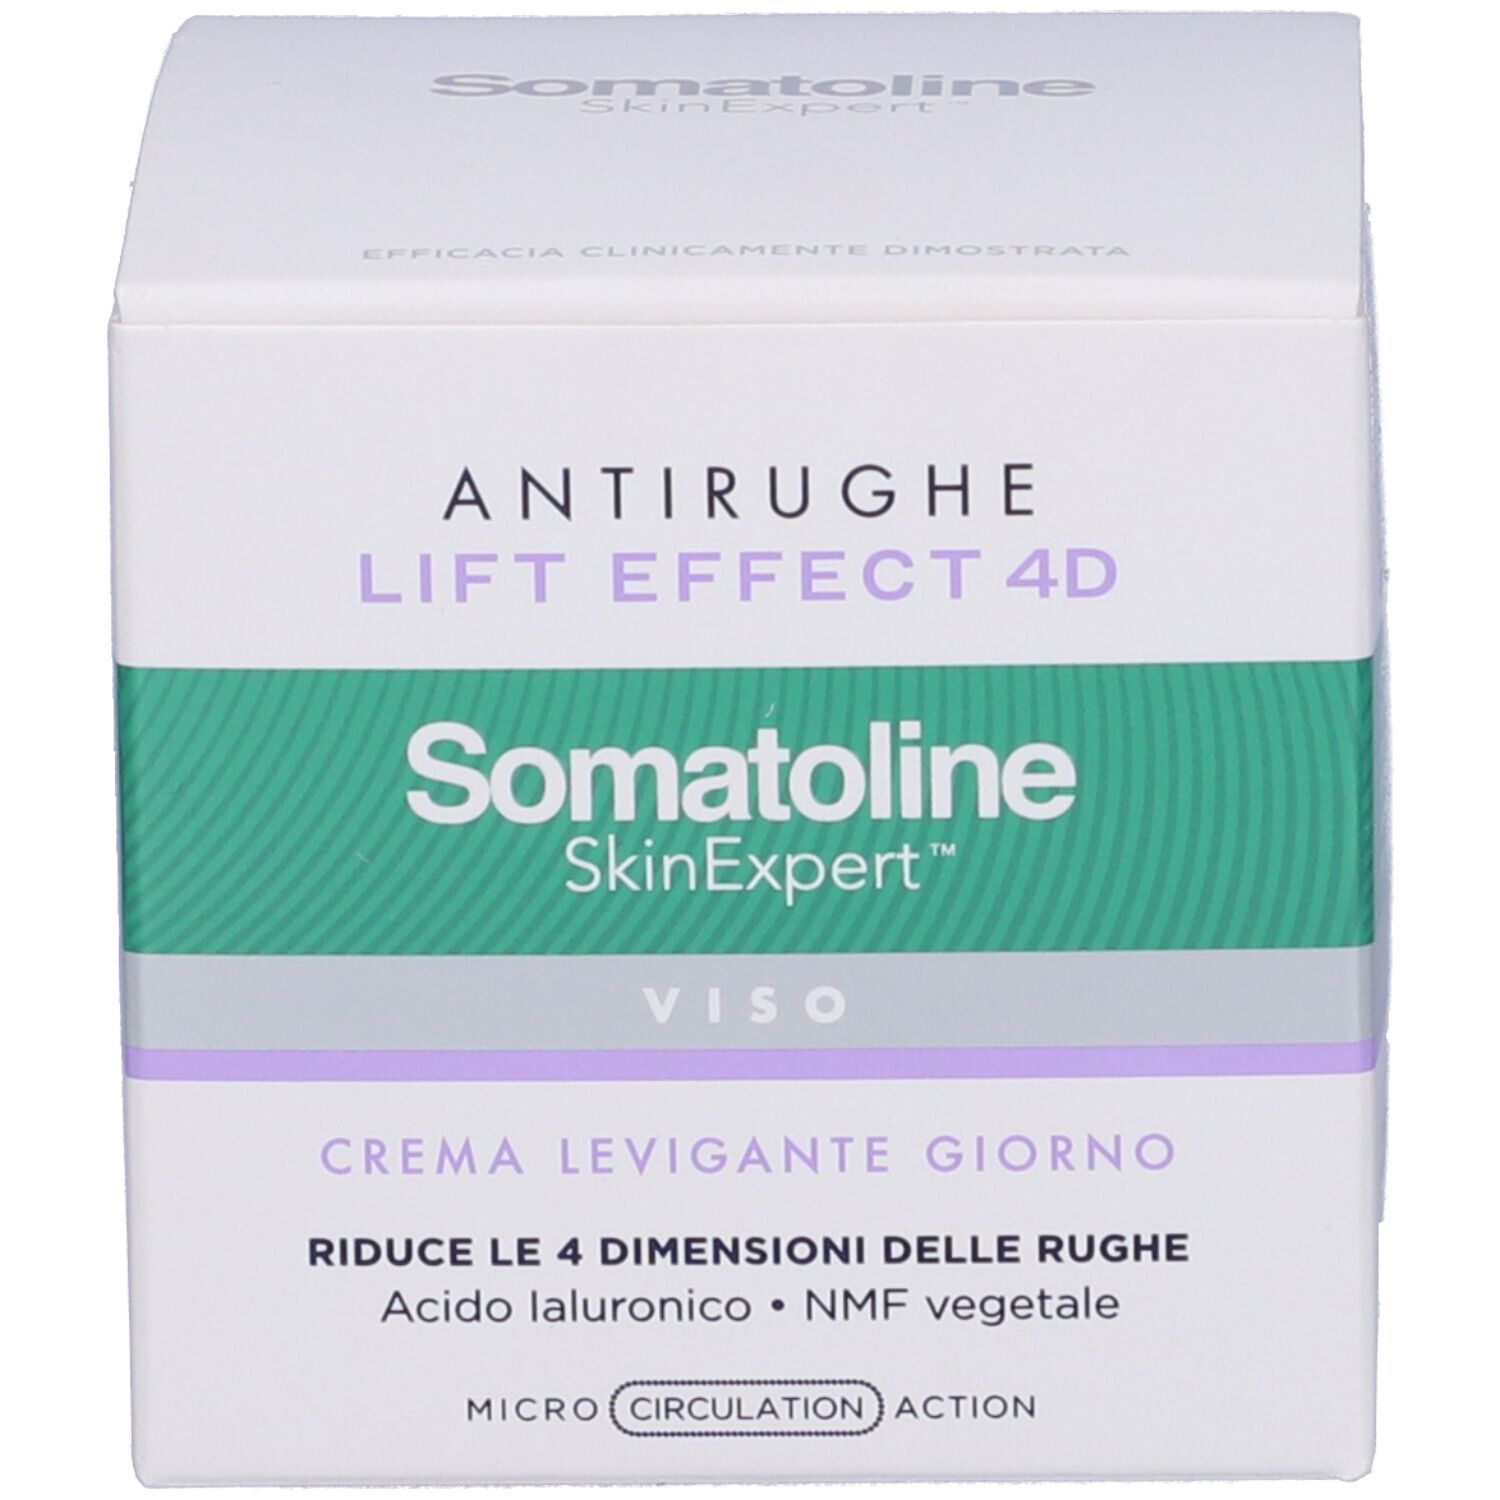 Somatoline Cosmetic® Lift Effect 4D Crema Giorno Filler Antirughe